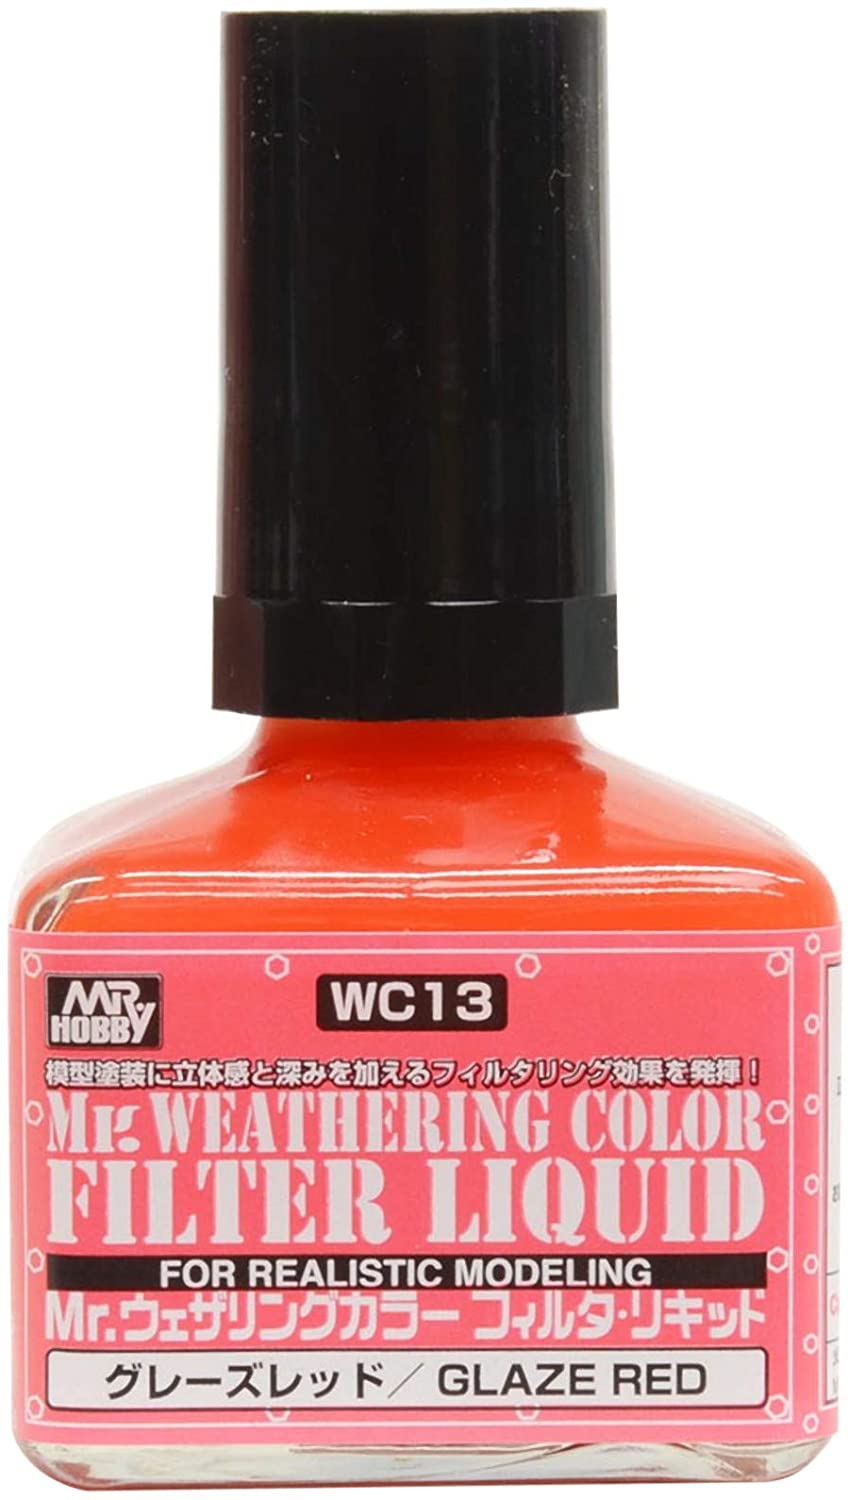 Mr. Weathering Color WC13: Filter Liquid Glaze Red 